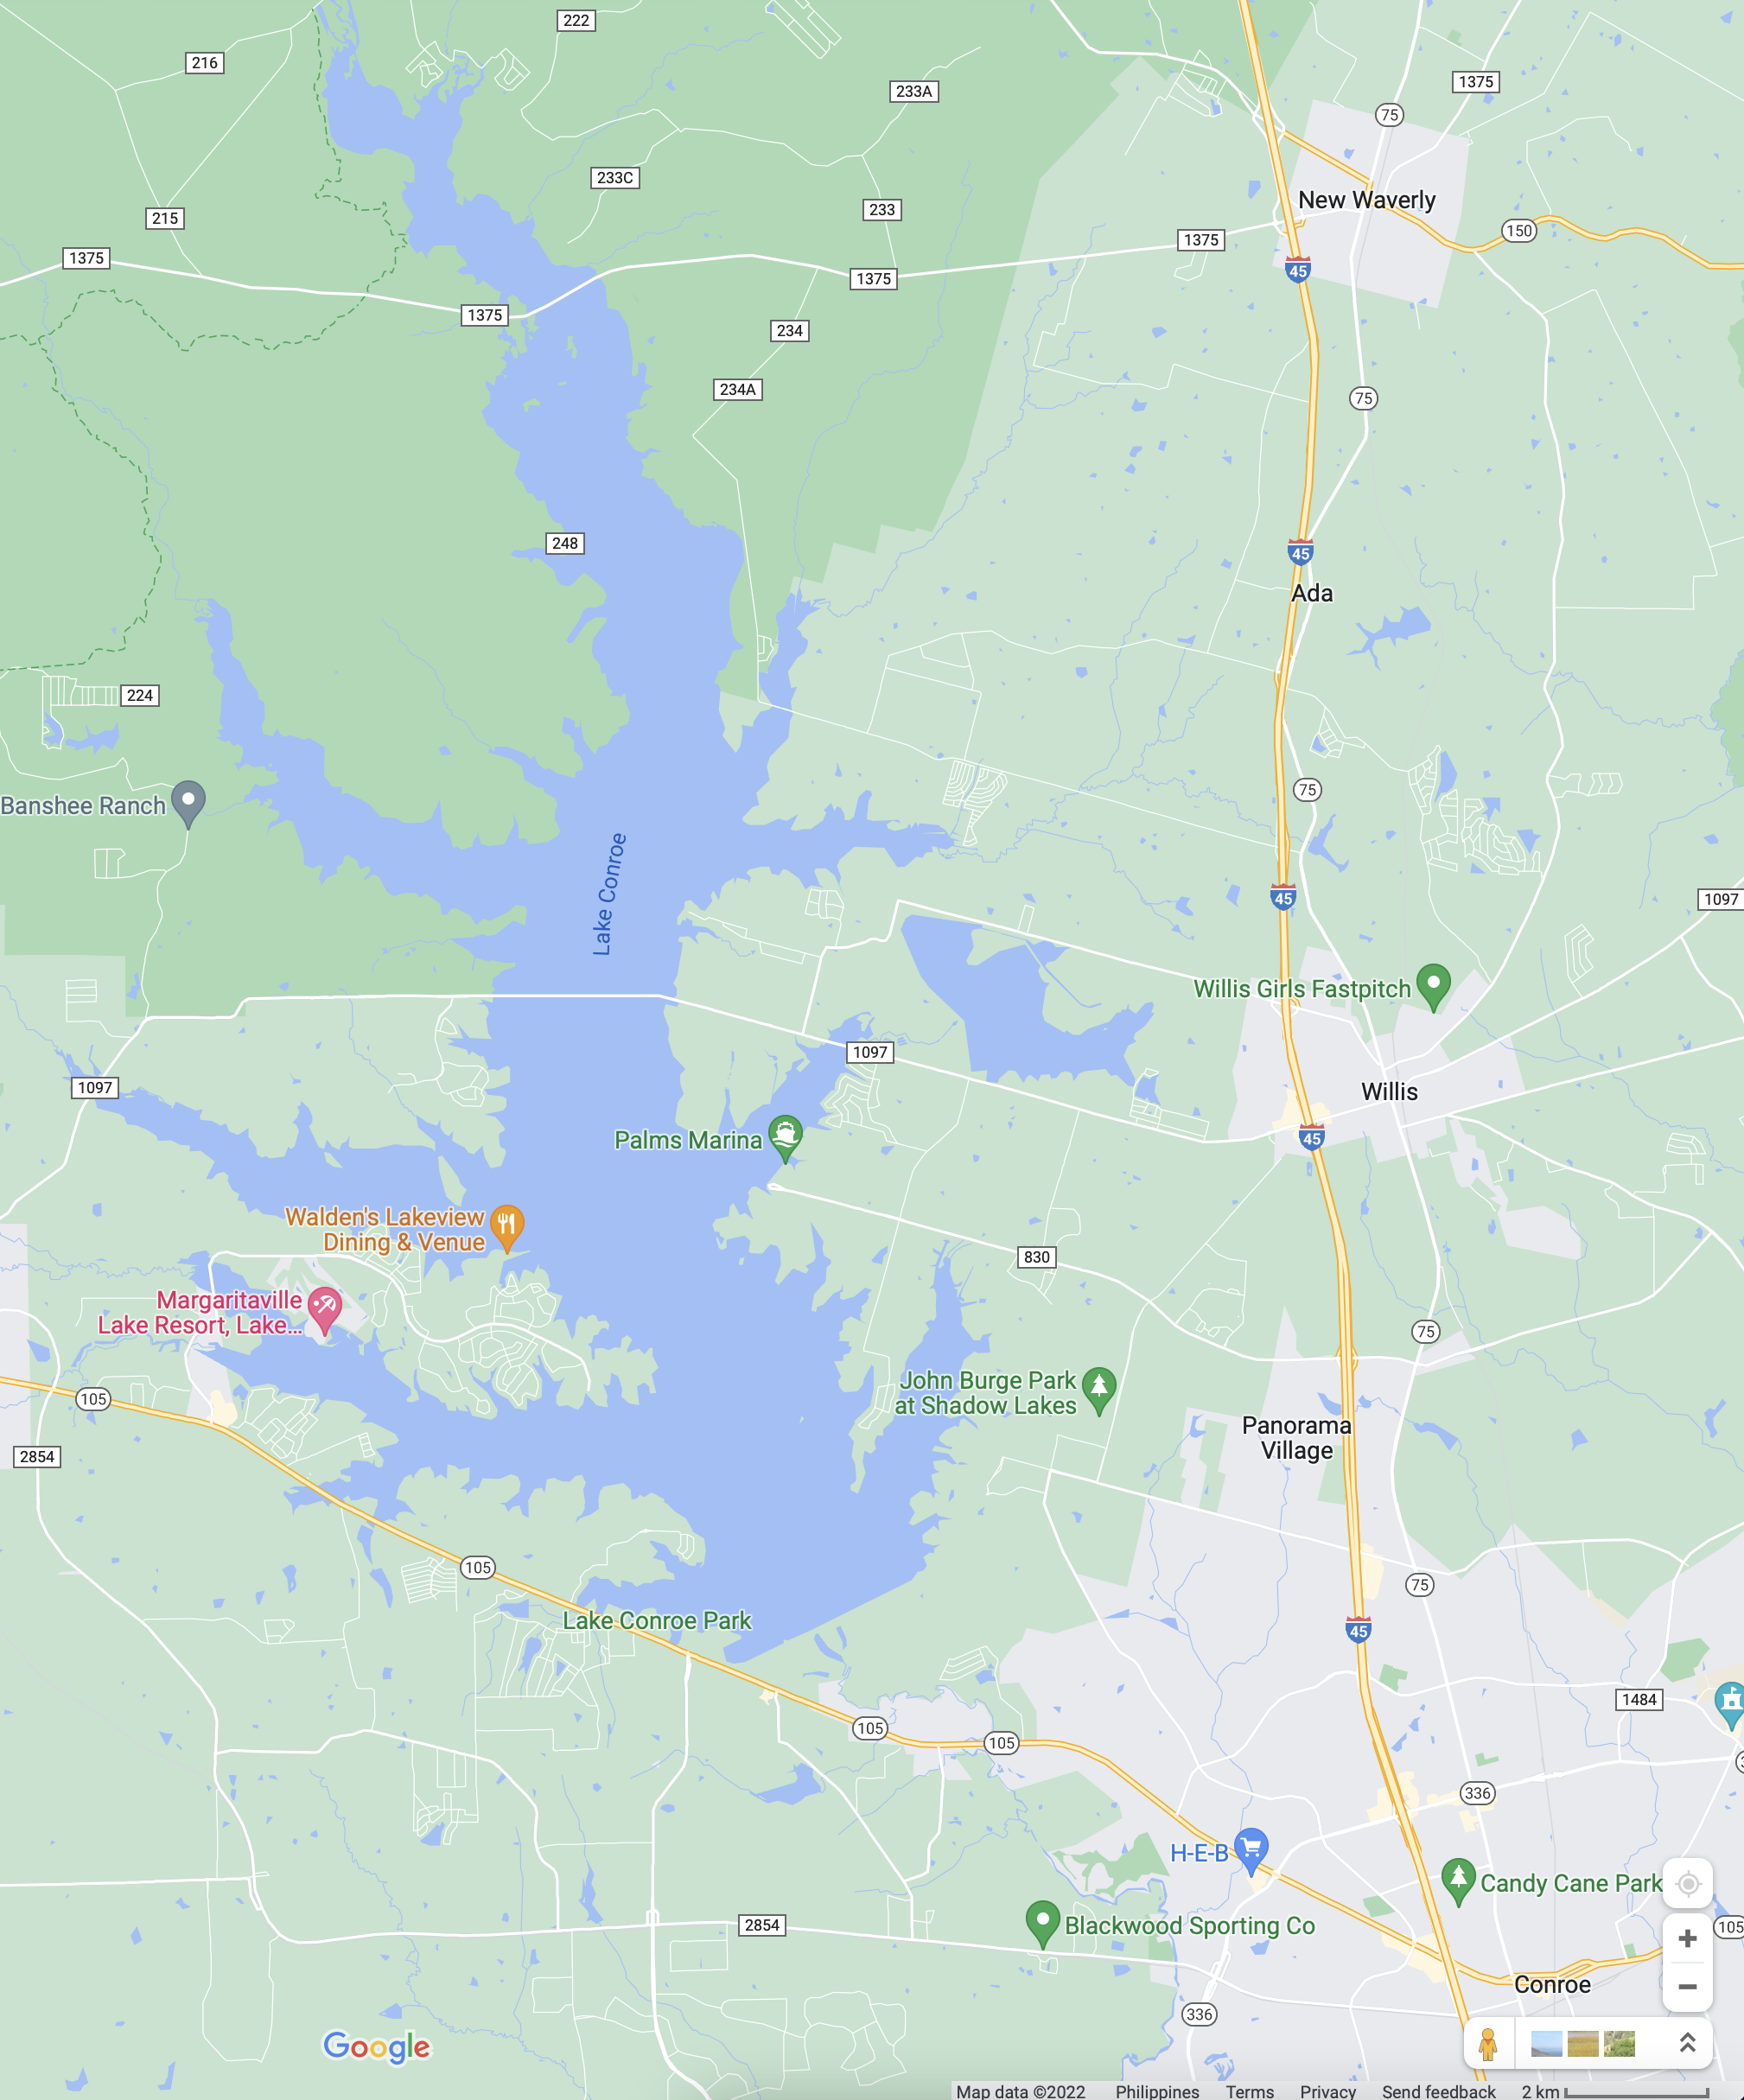 Map of Lake Conroe Area